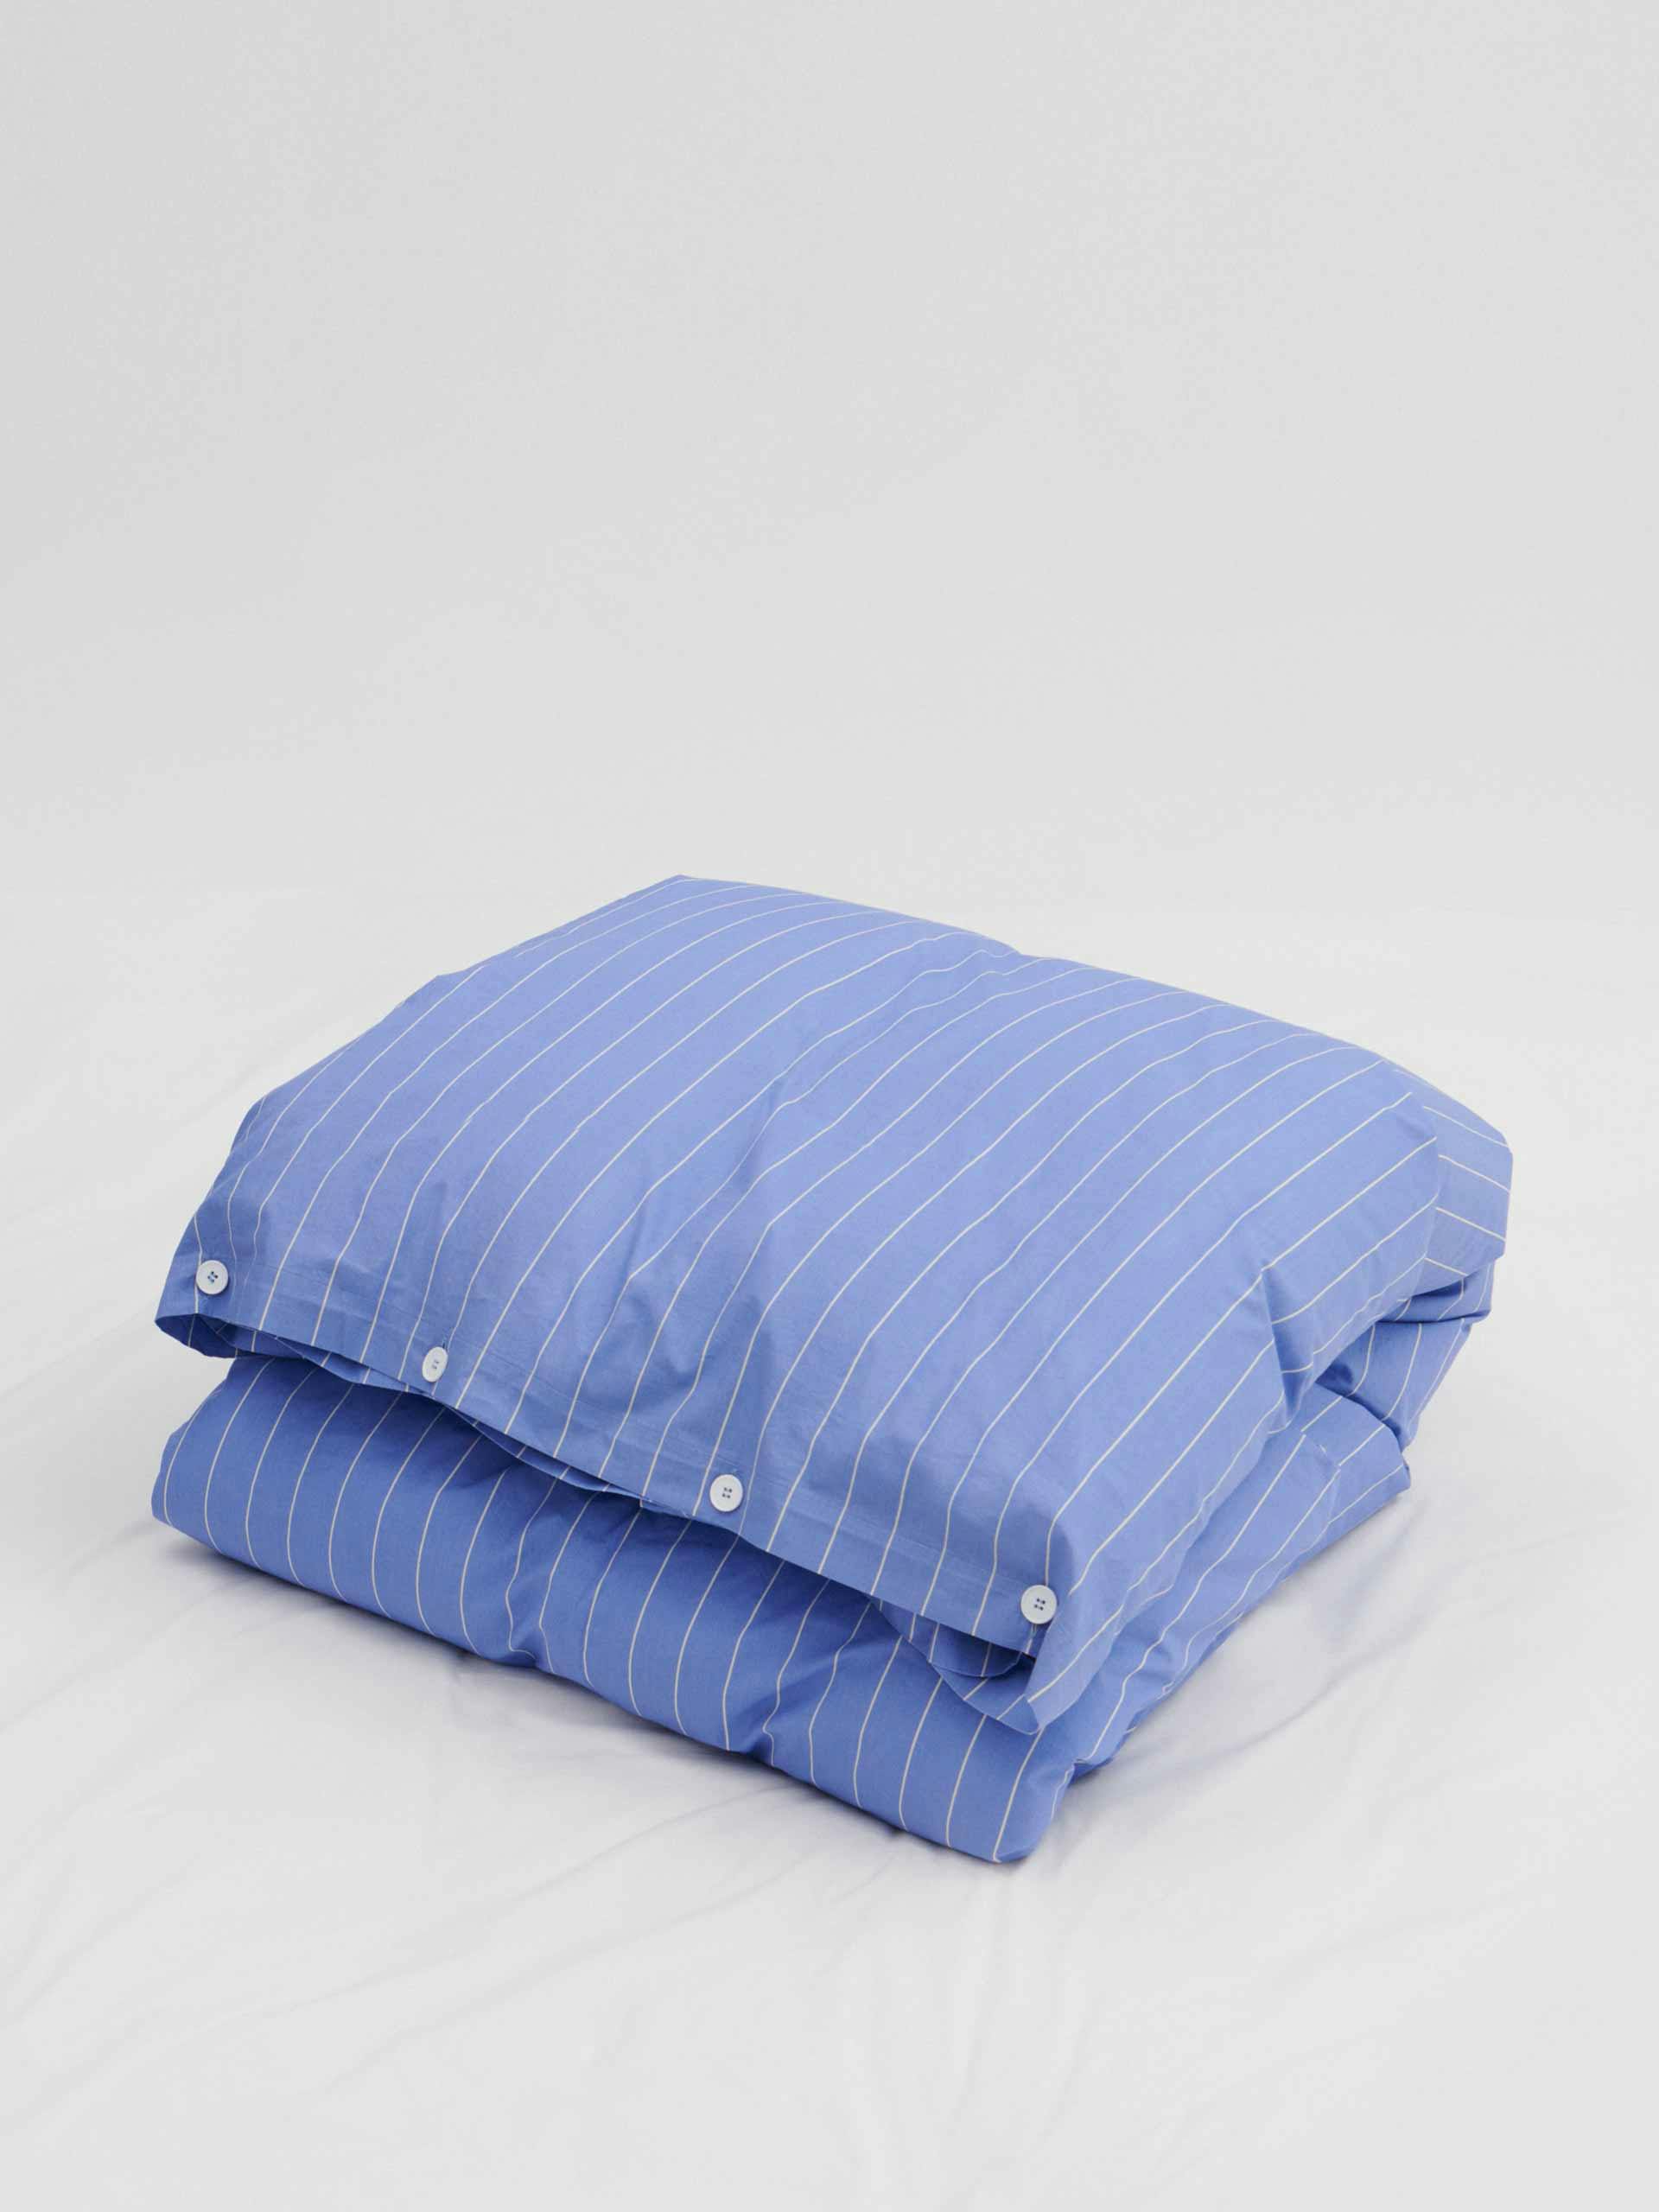 Blue stripe bedding